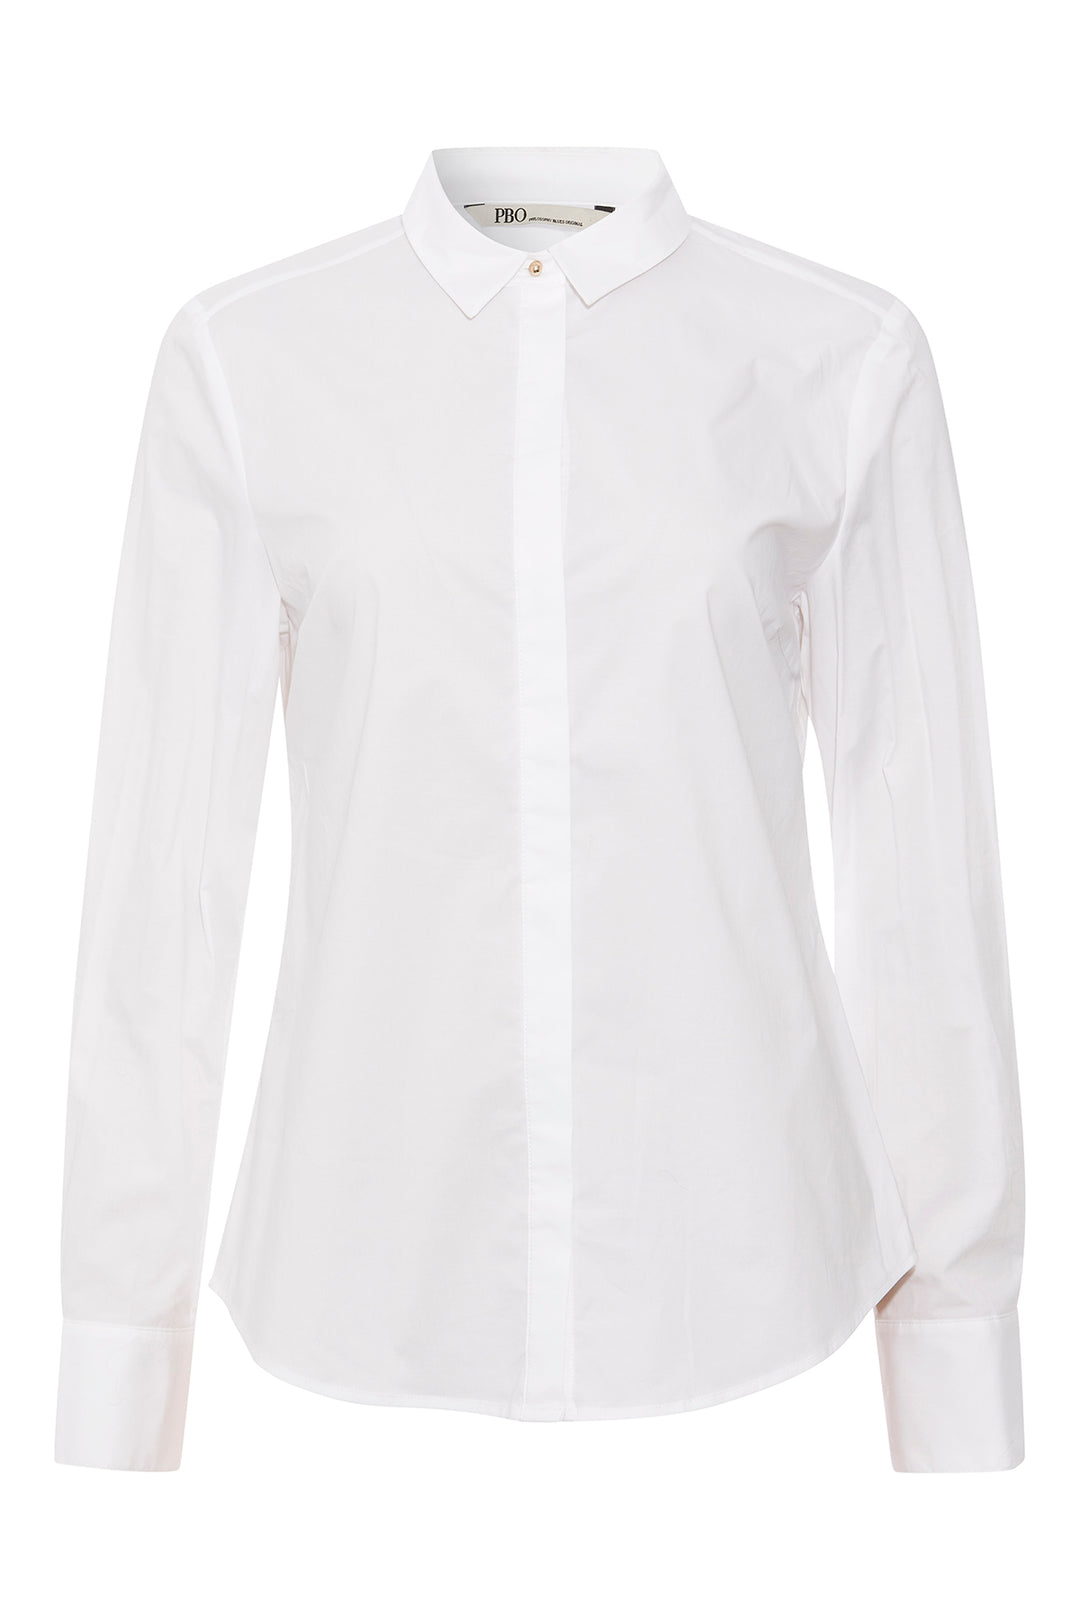 PBO New Meghan skjorte SHIRTS 01 White